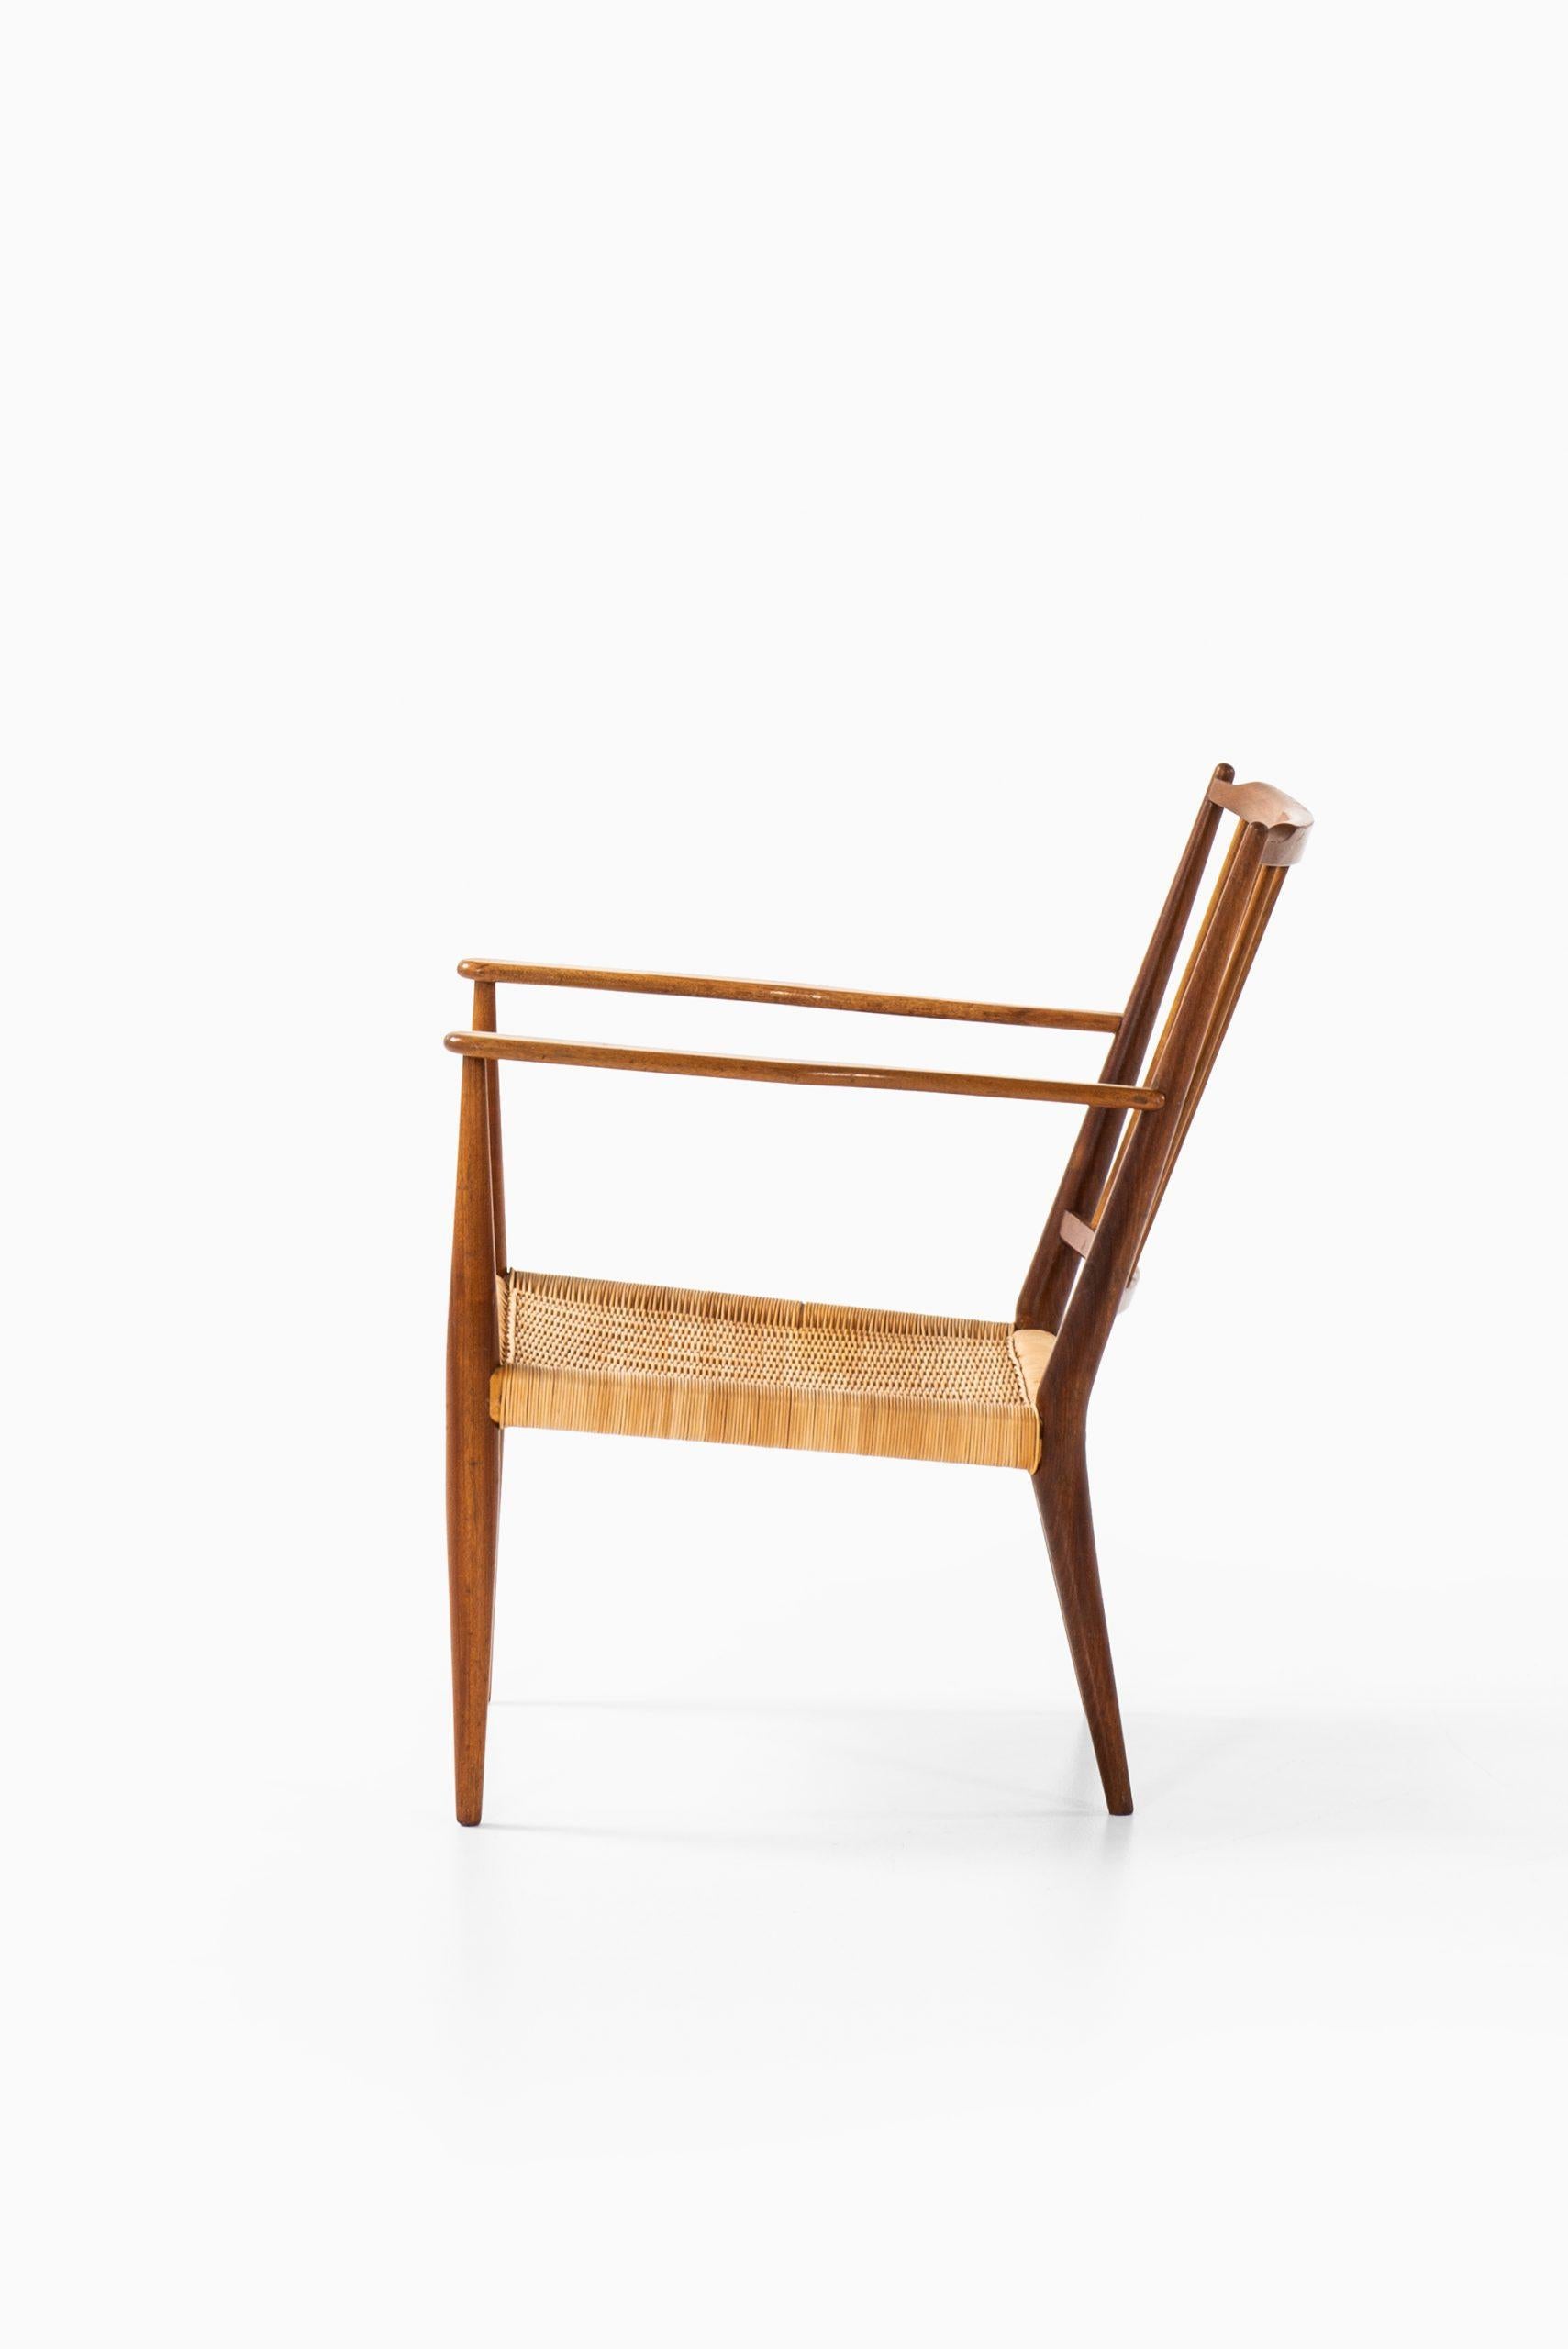 Josef Frank Easy Chair Model 508 Produced by Svenskt Tenn in Sweden In Good Condition For Sale In Limhamn, Skåne län